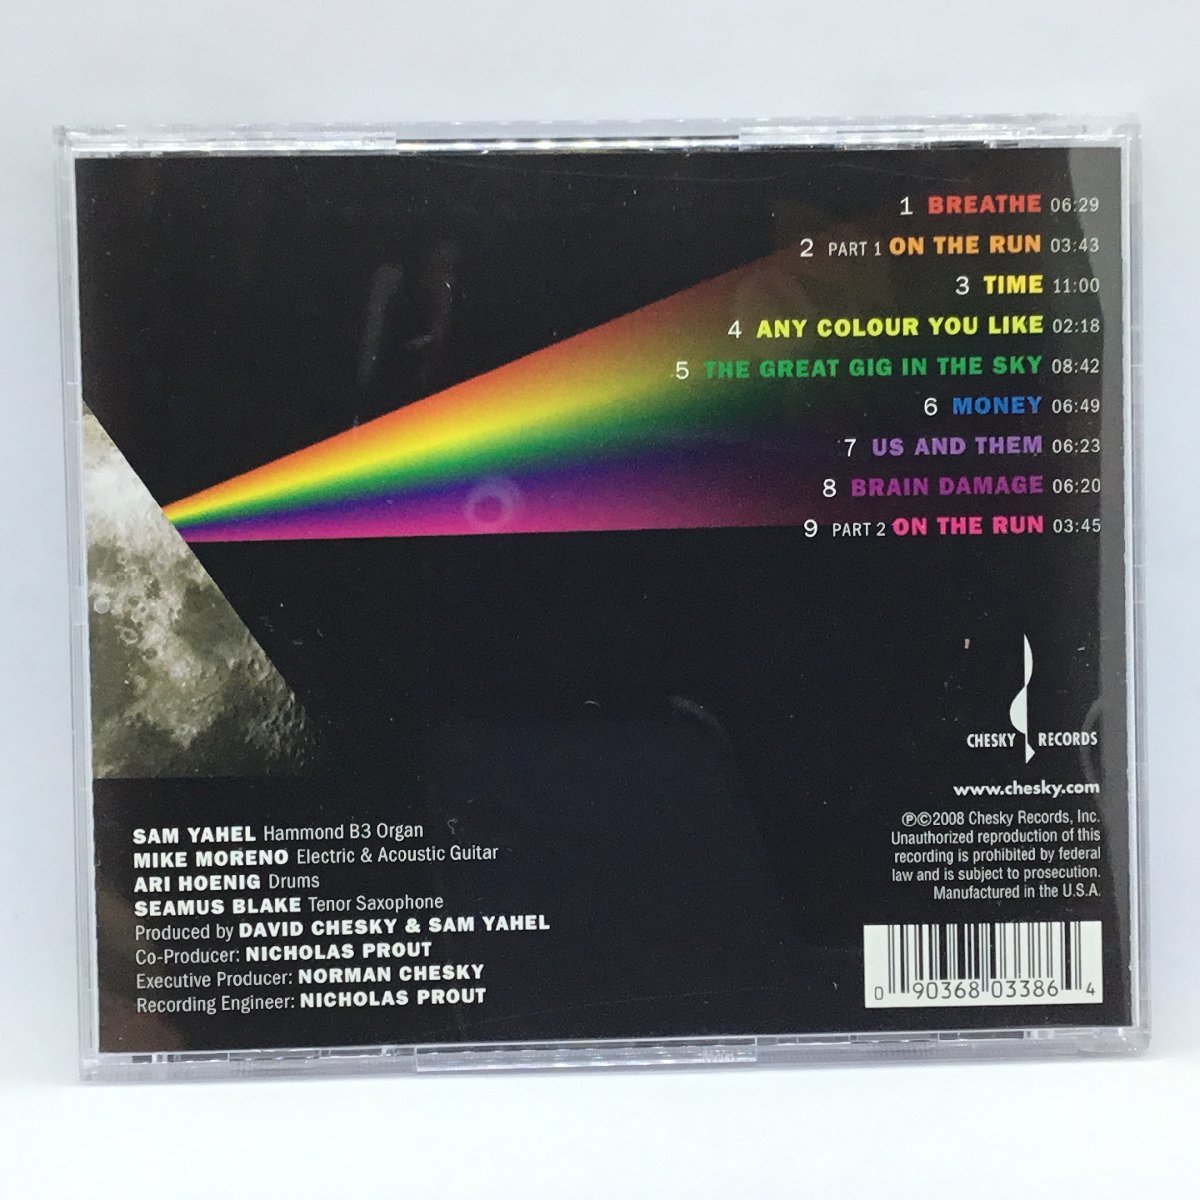 SACDハイブリッド◇Sam Yahel, Ari Hoenig, Mike Moreno, Seamus Blake / Jazz Side Of The Moon (The Music Of Pink Floyd) (SACD HYBRID)の画像4